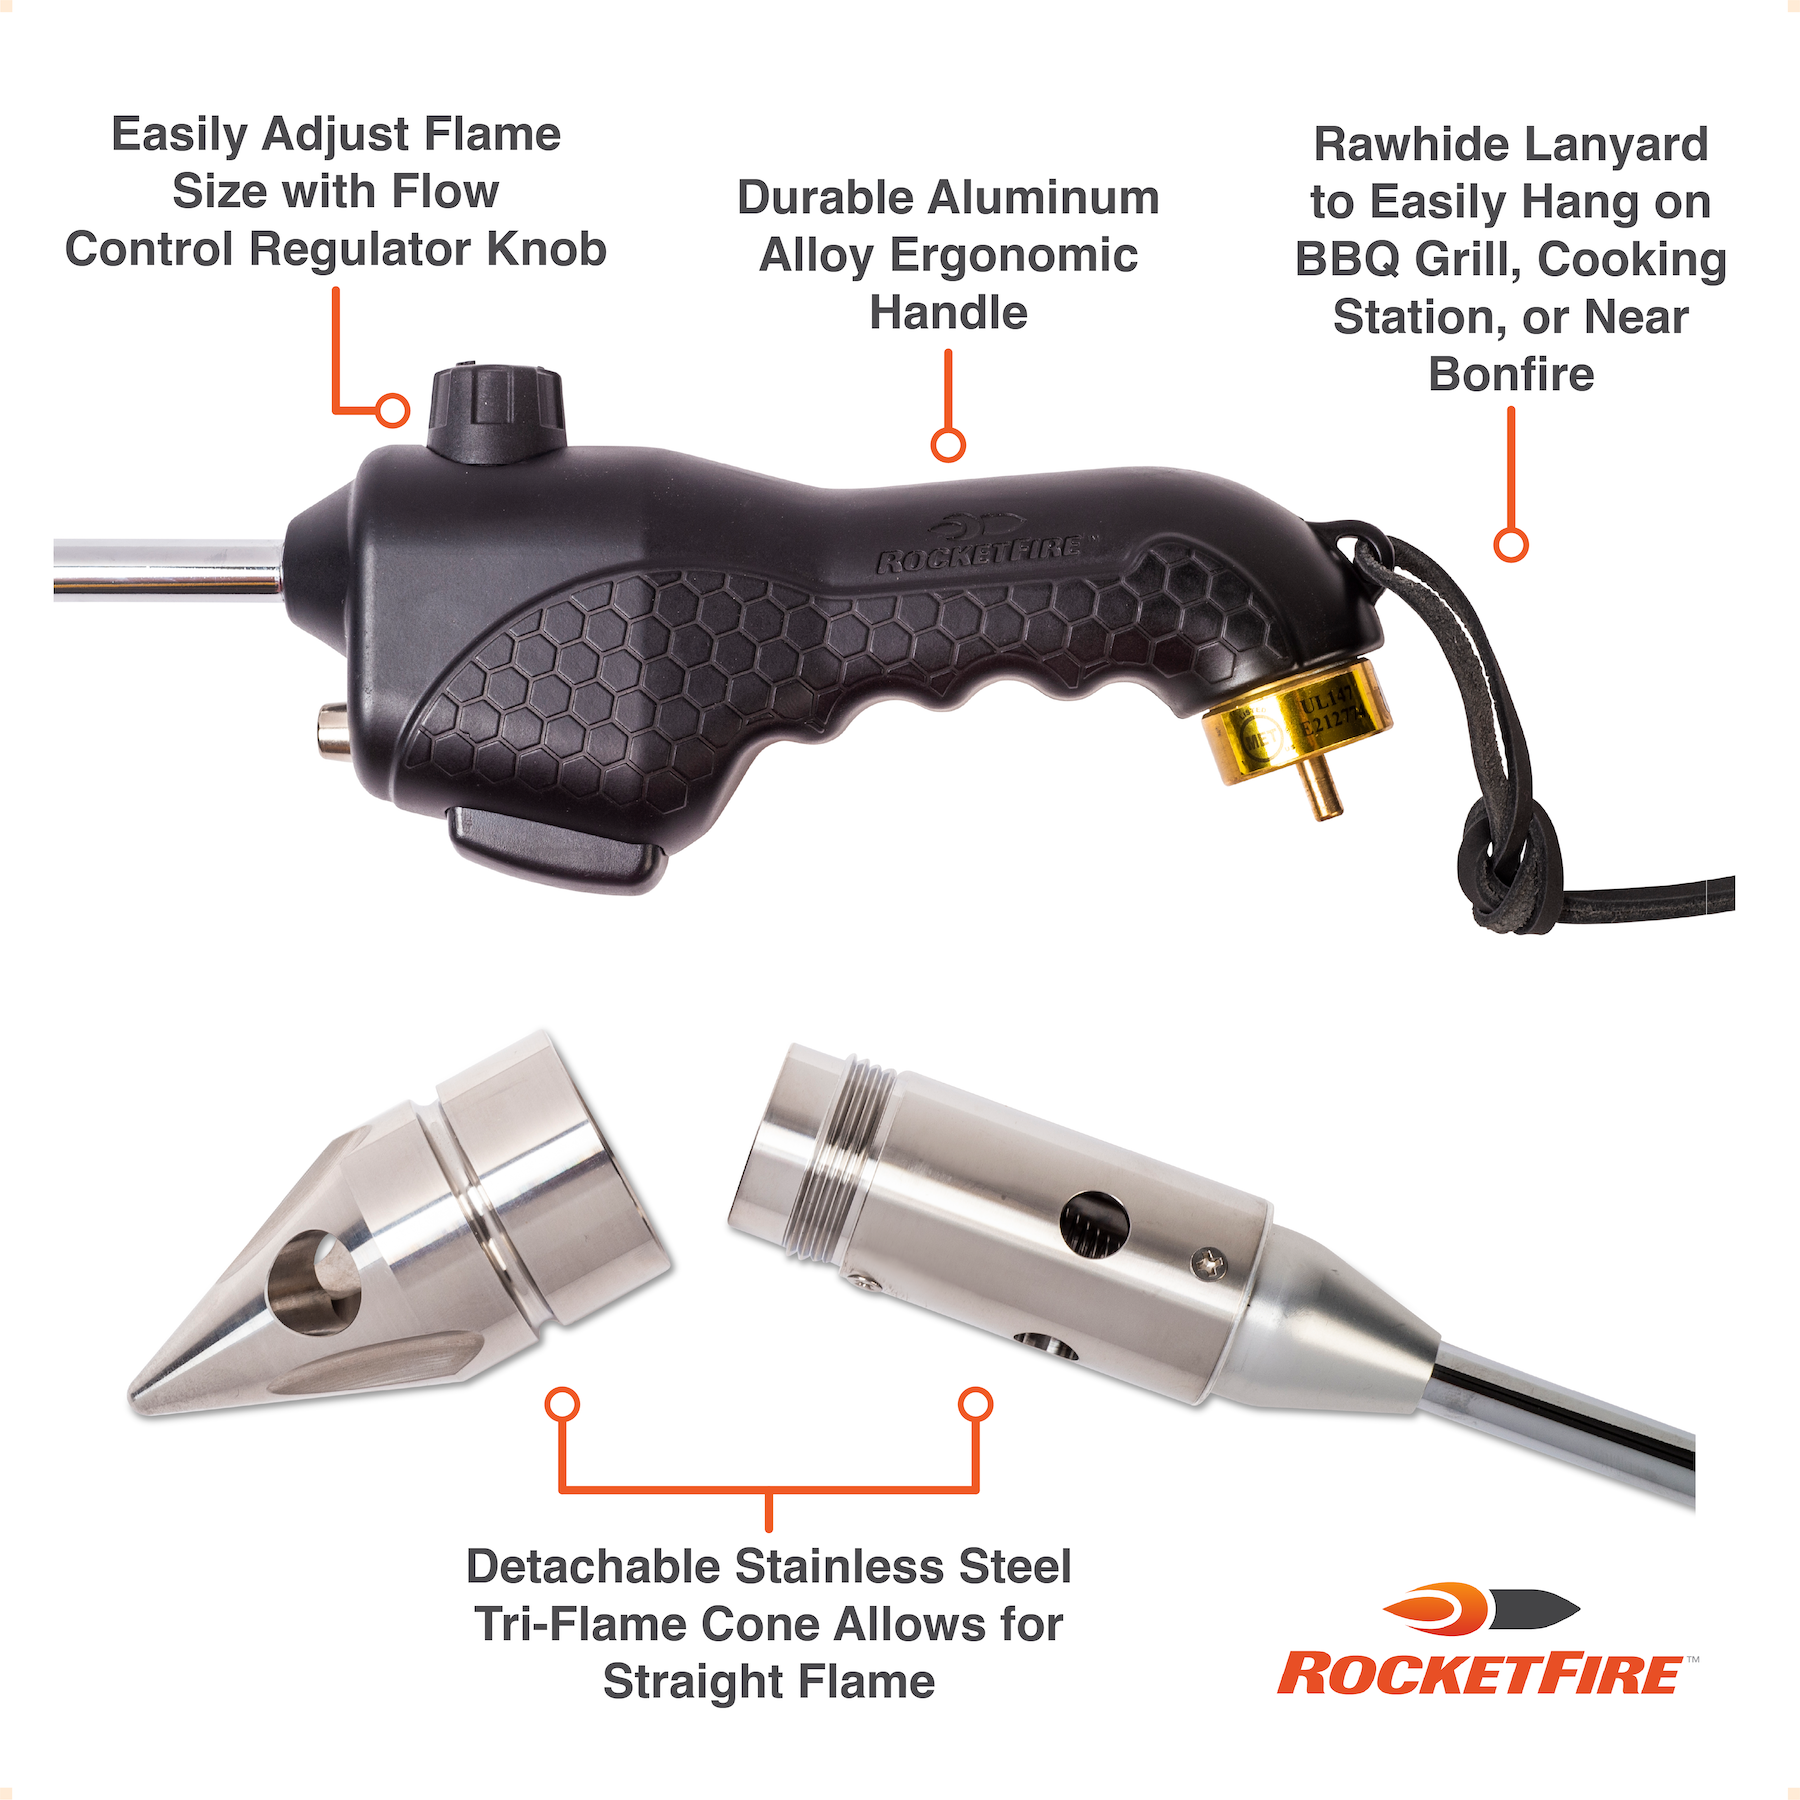 The RocketFire™ Fire Torch